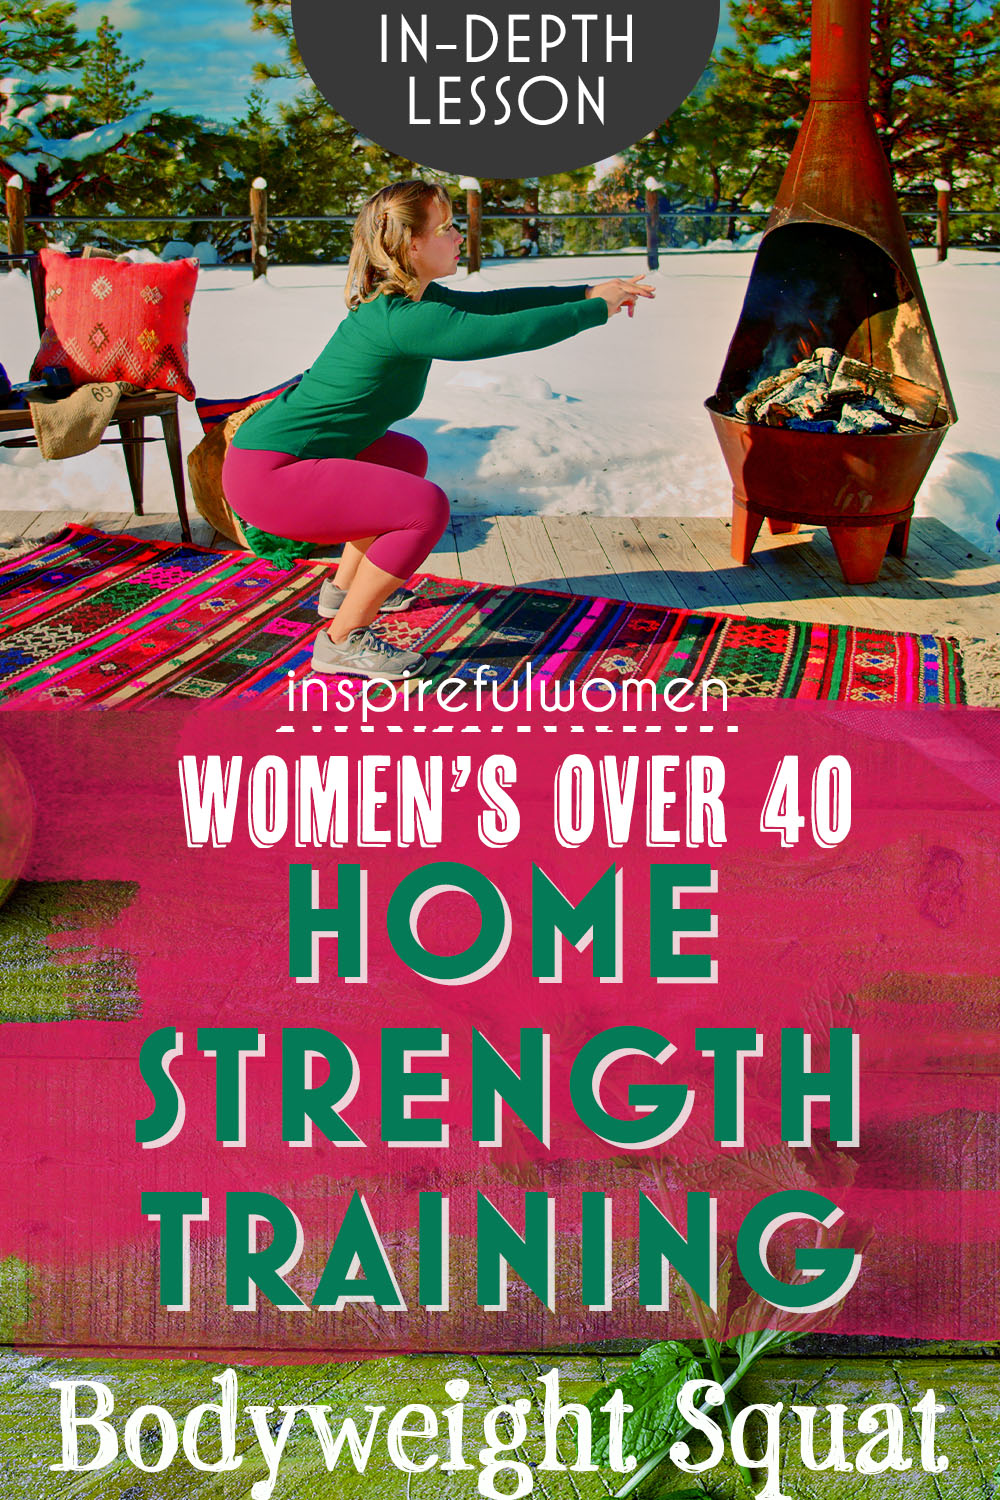 bodyweight-squat-gluteus-maximus-quadriceps-lower-body-exercise-home-strength-training-women-above-40